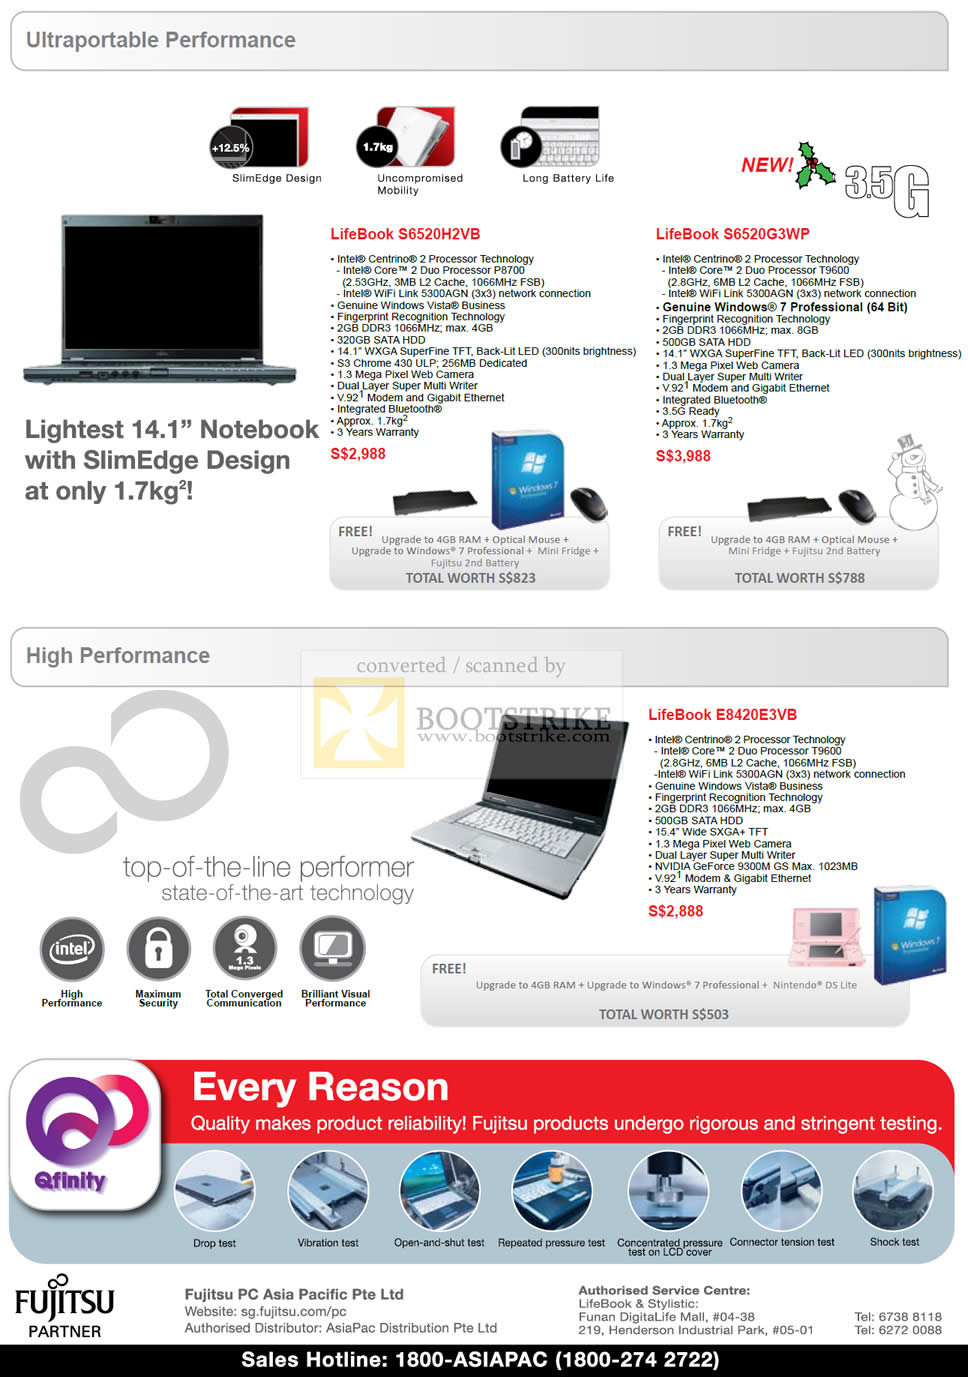 Sitex 2009 price list image brochure of Fujitsu Lifebook S6520 H2VB G3WP Notebooks E8420 E3VB